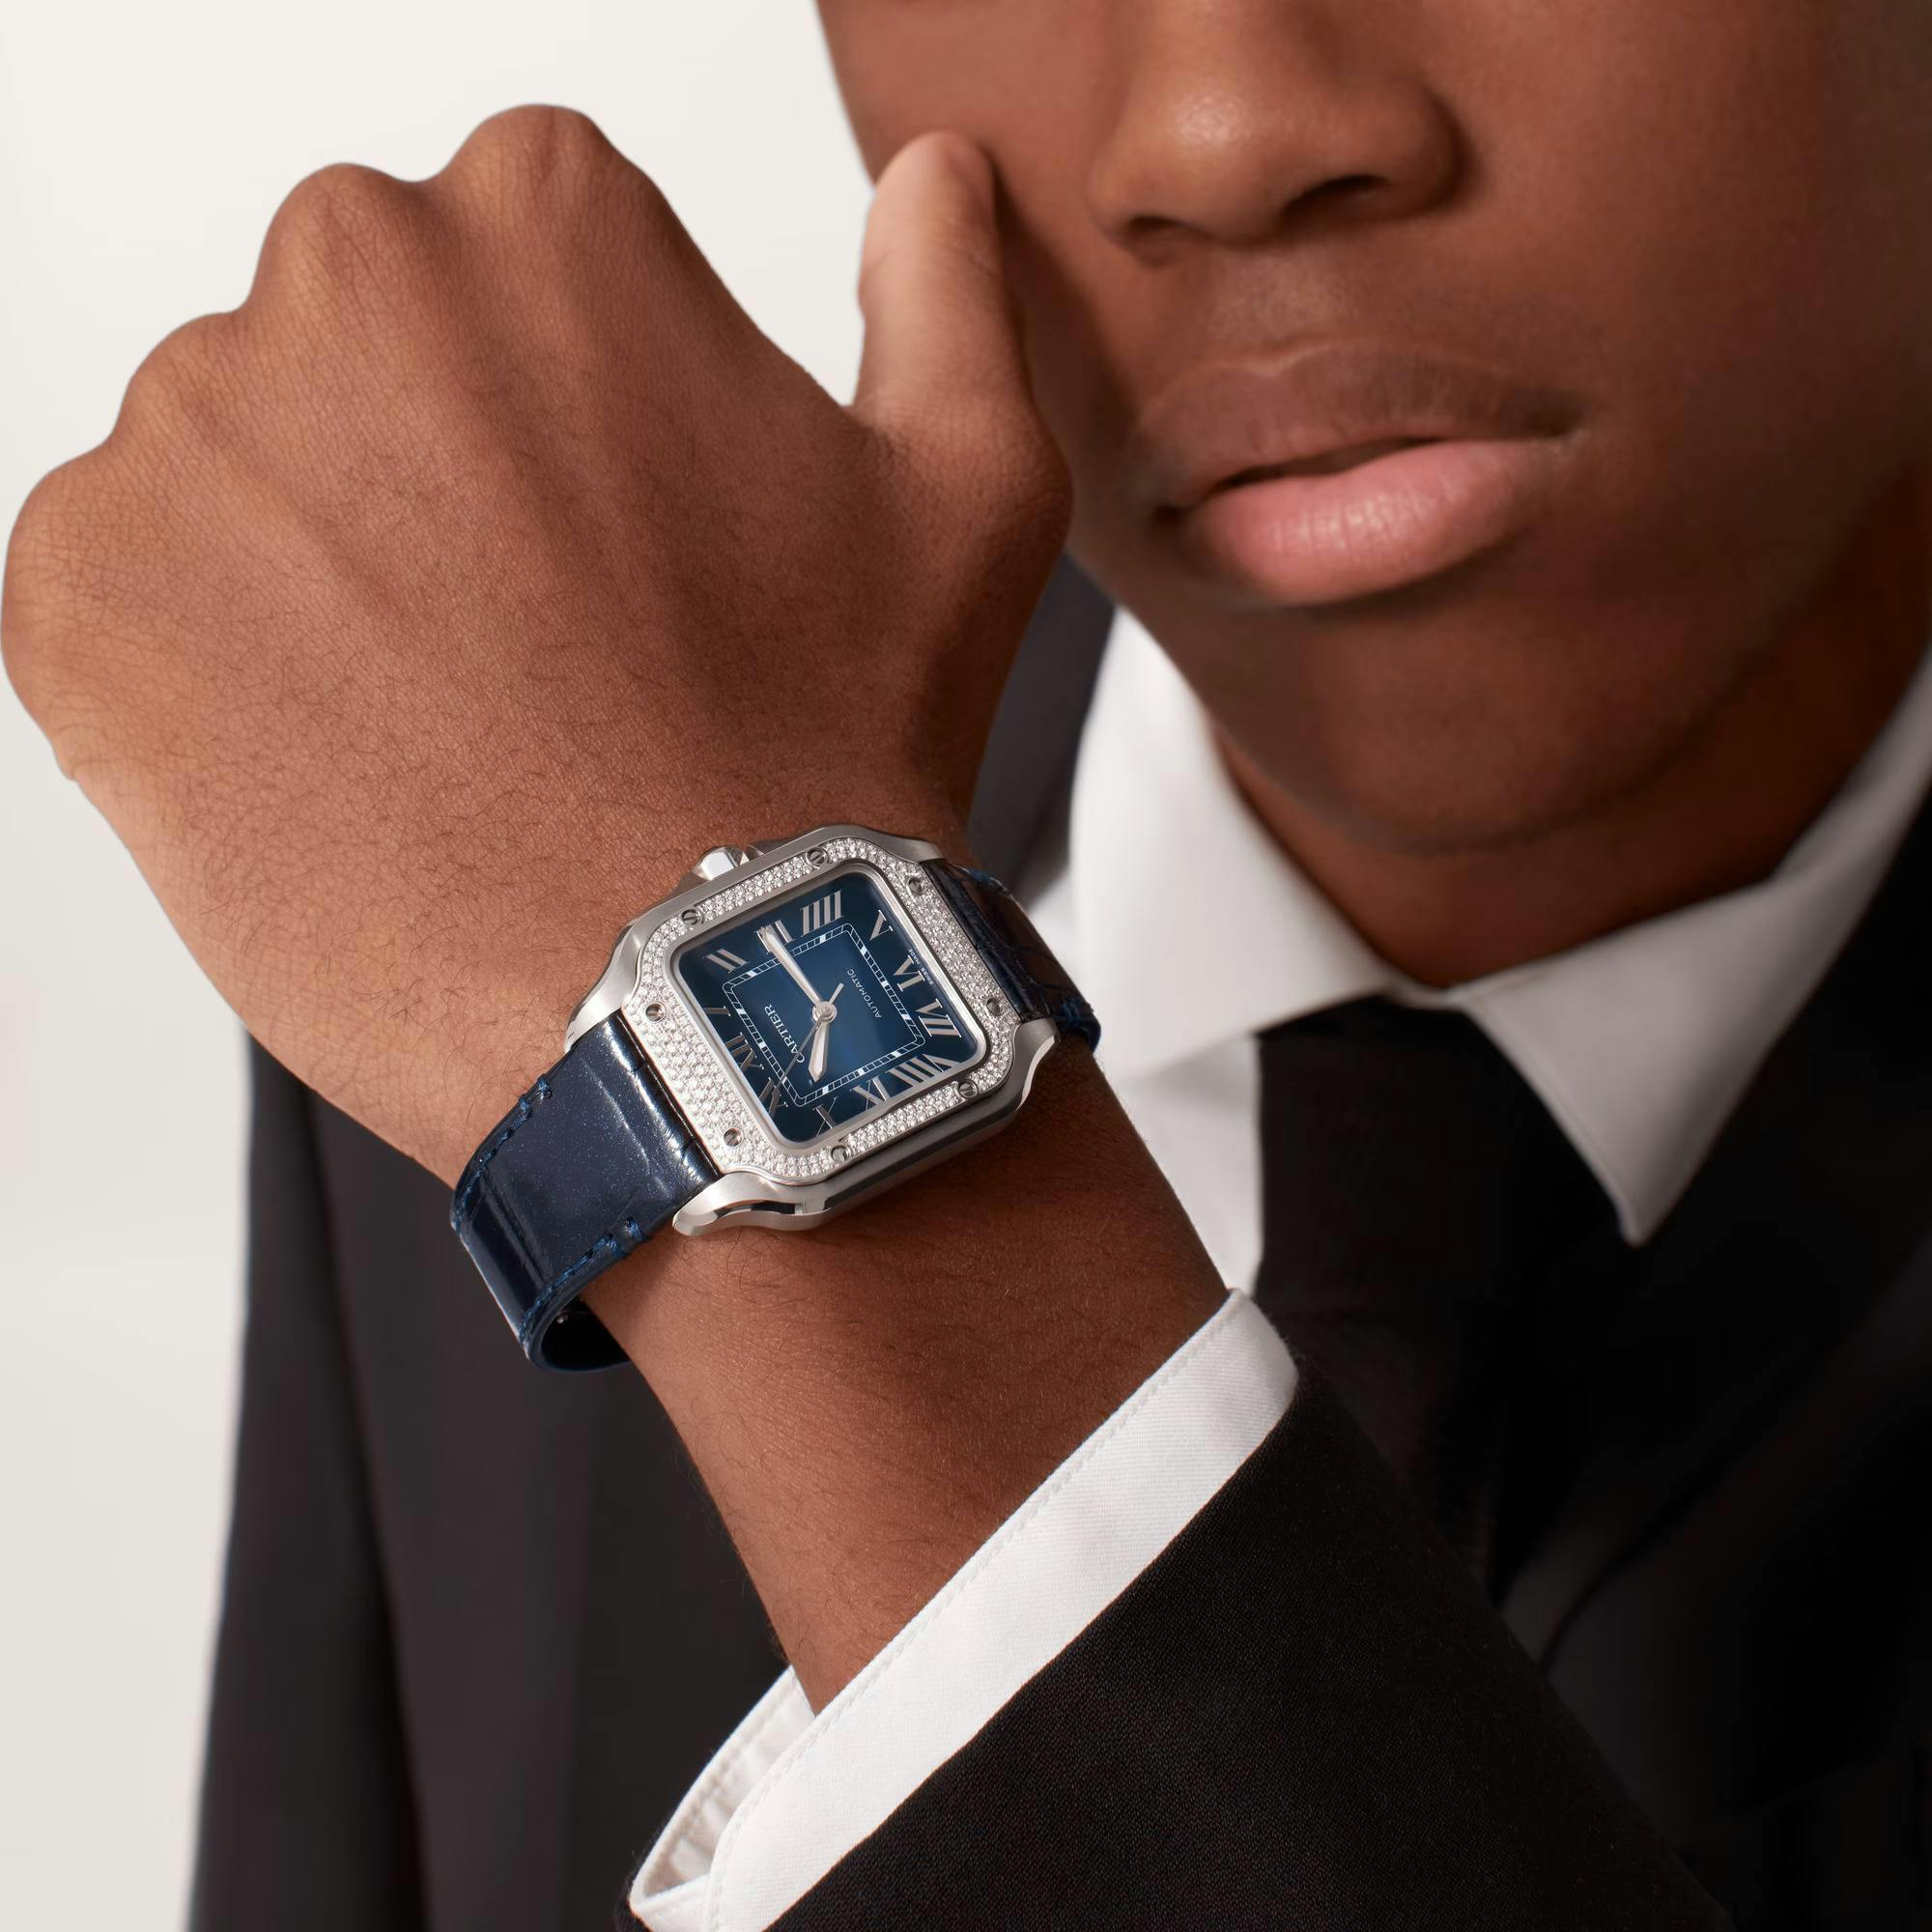 Santos de Cartier Watch with Blue Dial and Diamonds, medium model 3